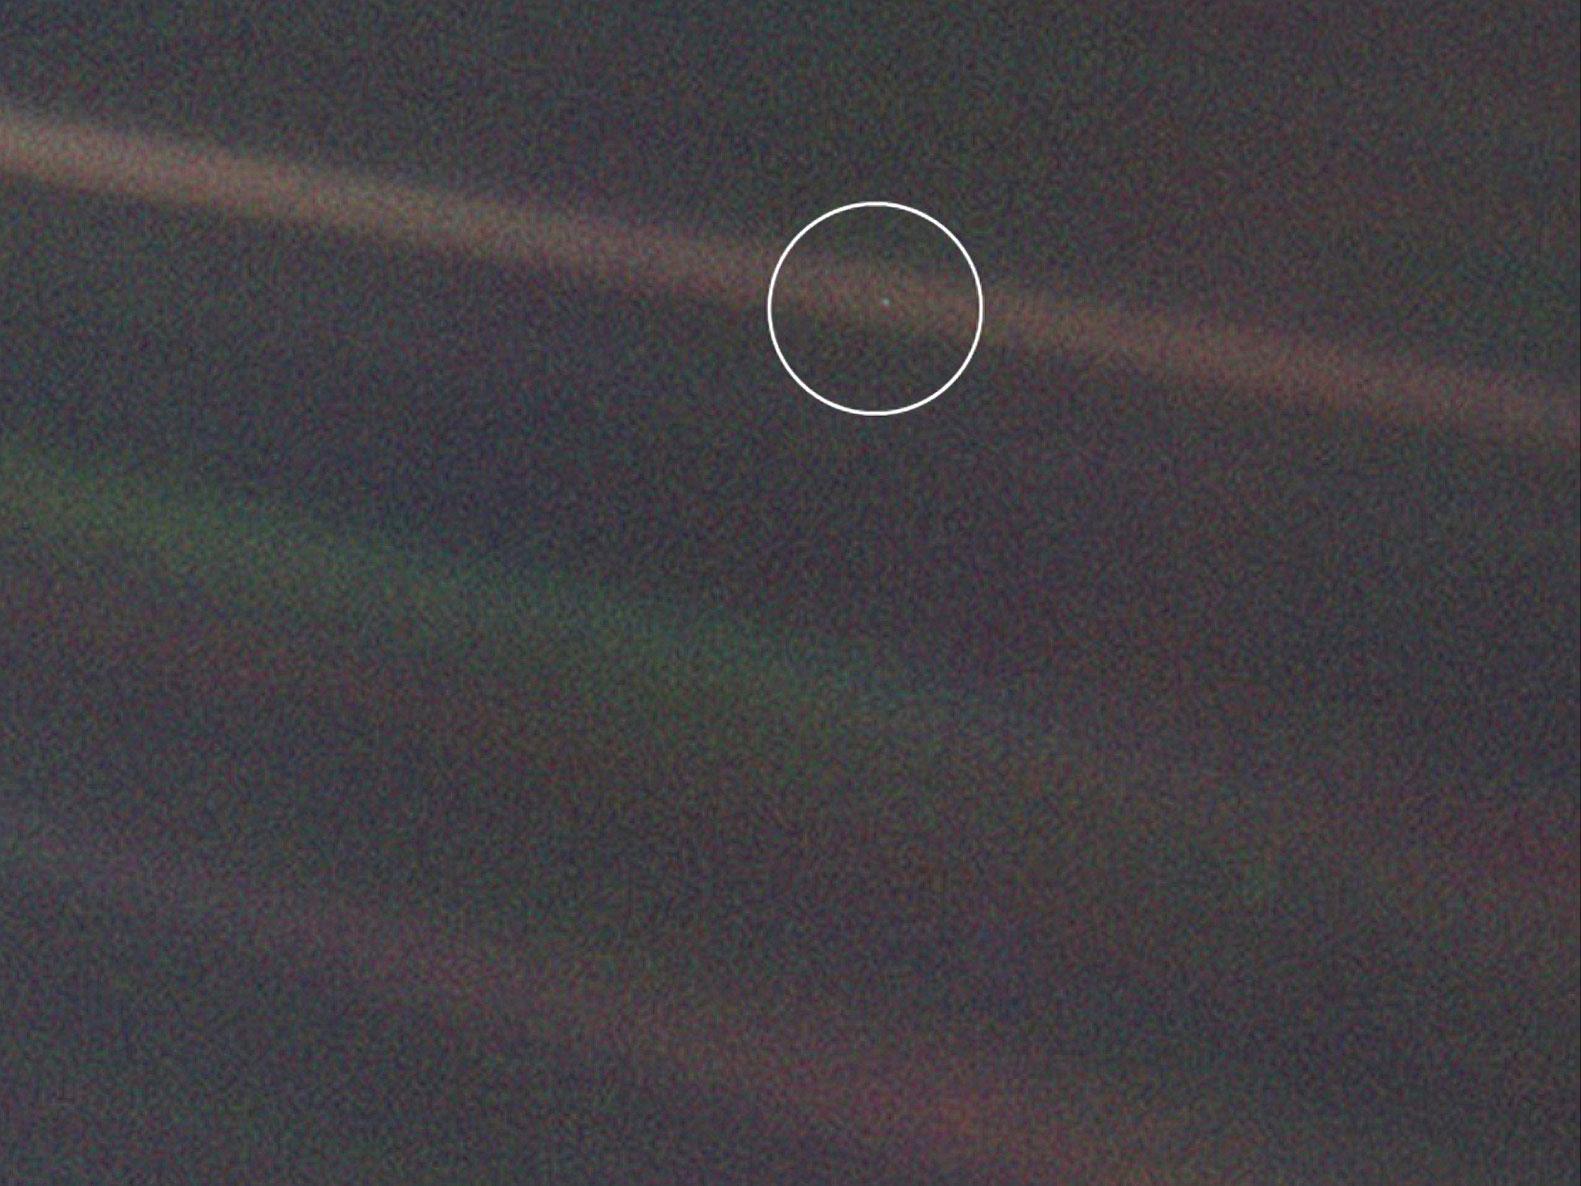 Voyager Pale Blue Dot Photo